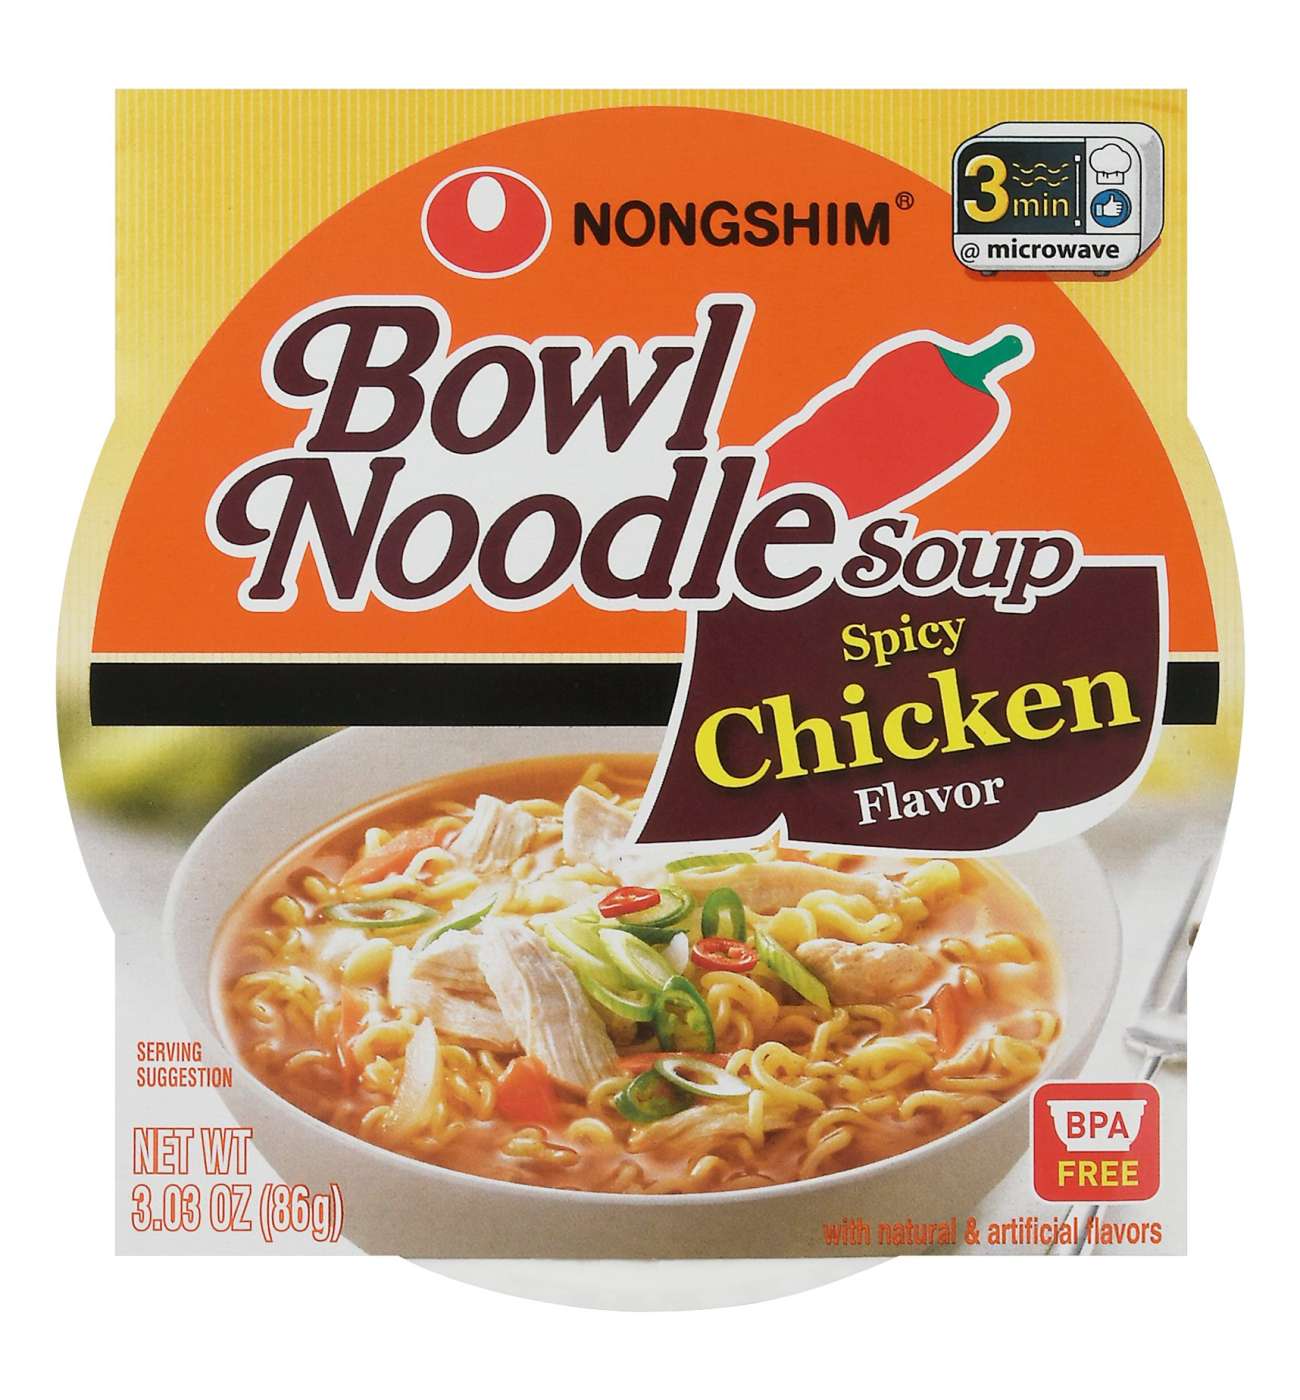 Nongshim Spicy Chicken Bowl Noodle Soup - Shop Soups & Chili at H-E-B